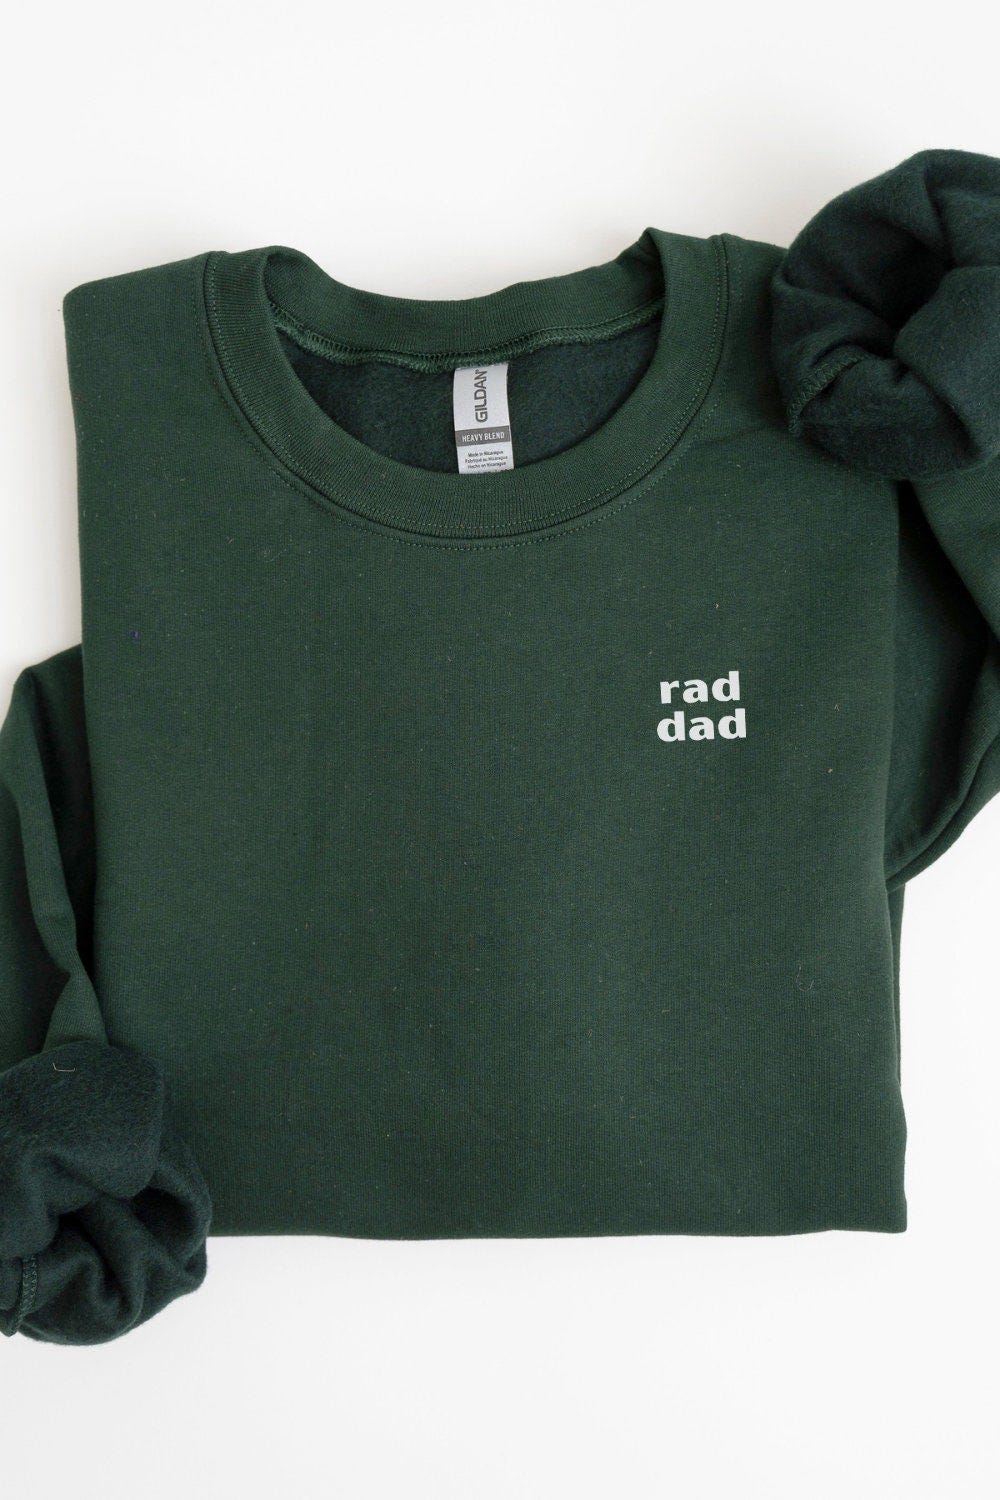 Rad Dad Sweatshirt Gift for Him hoodie funny sweatshirt husband gift fathers day sweatshirt gift for dad fathers day hoodie rad dad tshirt